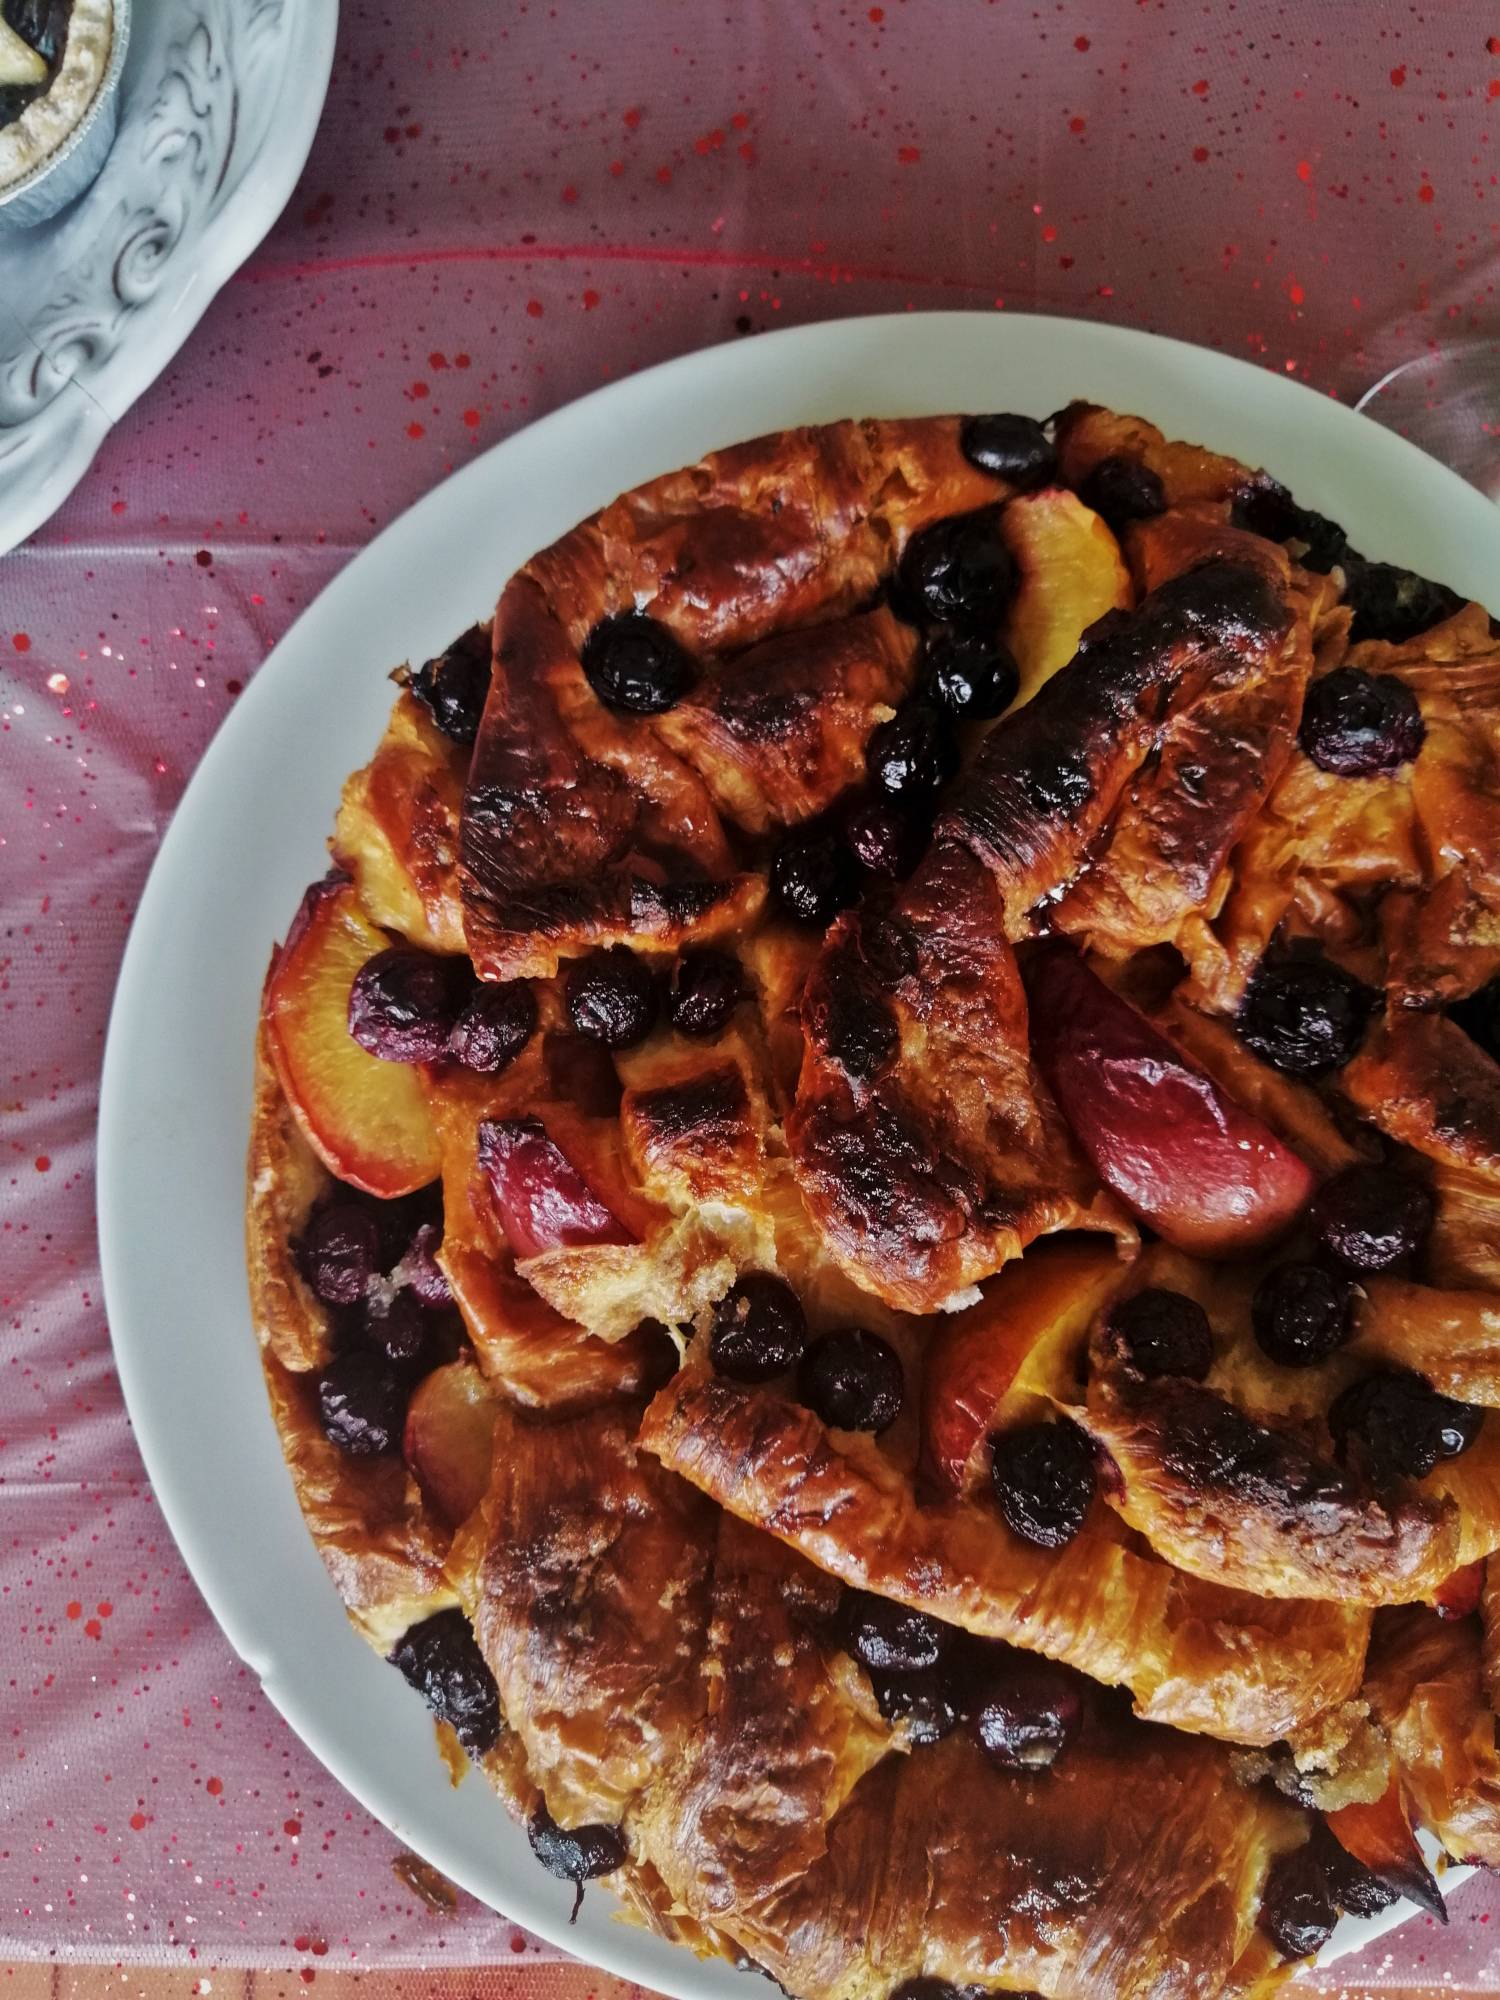 Nectarine and blueberry croissant cake